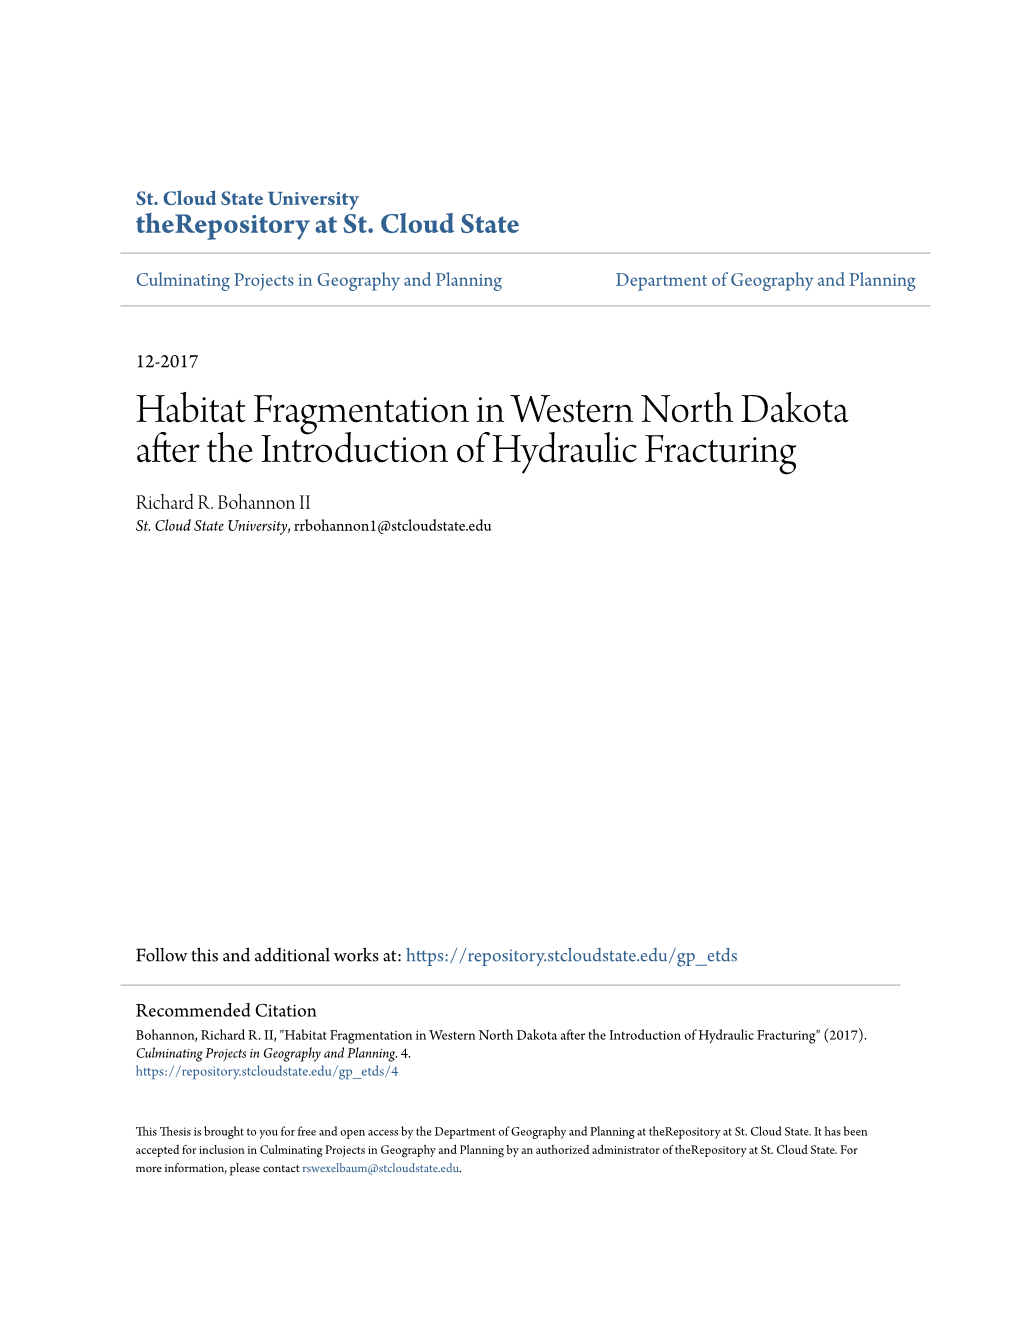 Habitat Fragmentation in Western North Dakota After the Introduction of Hydraulic Fracturing Richard R